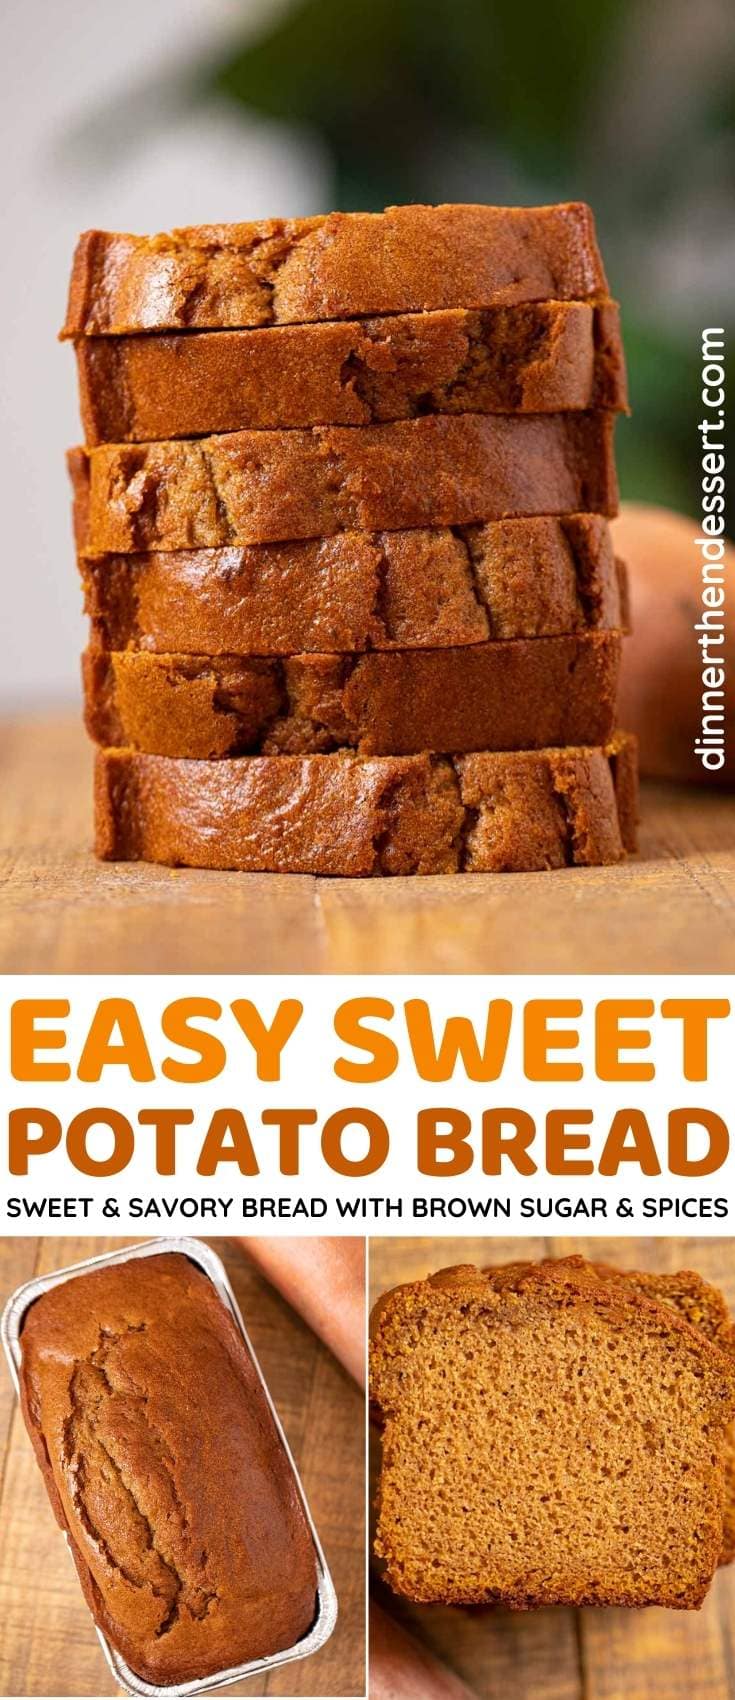 How to Make Potato Bread